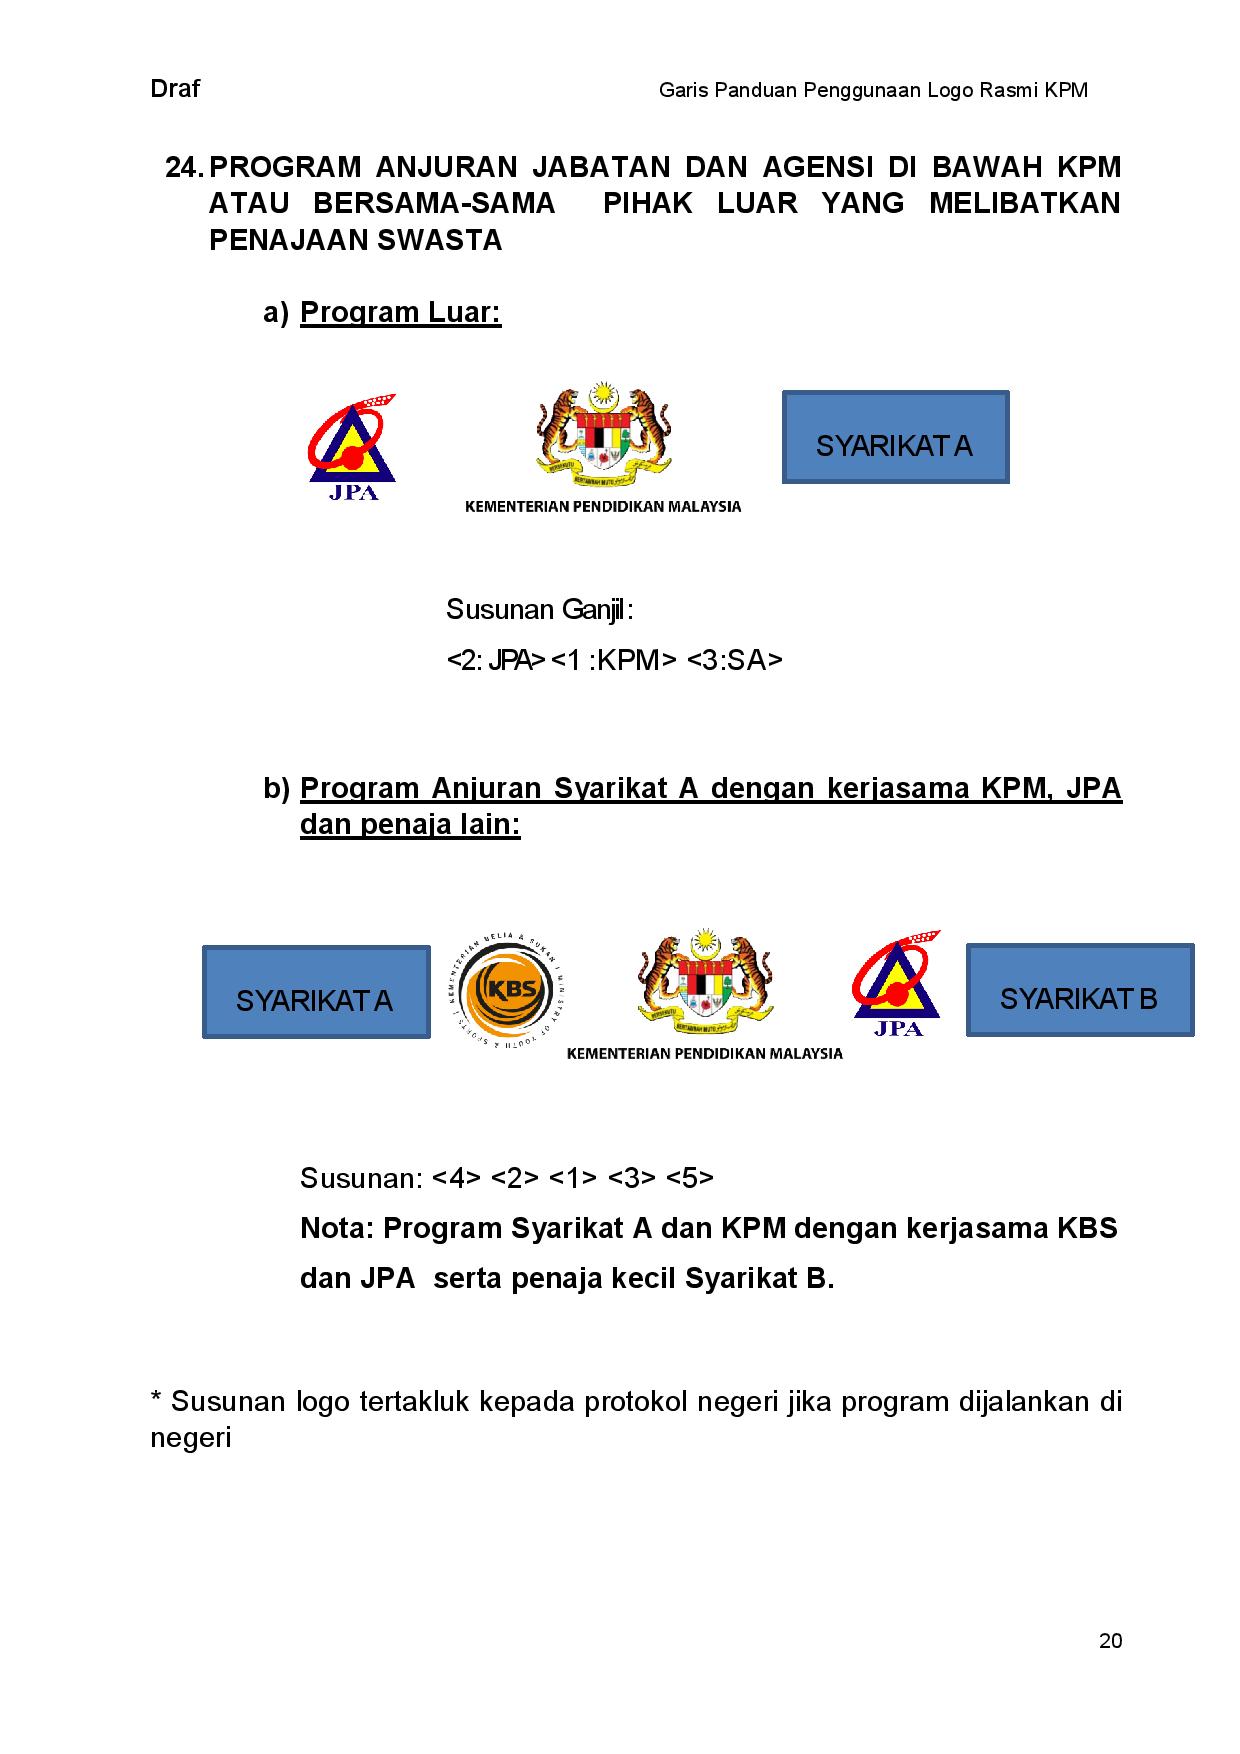 Garis Panduan Susunan  Logo  KPM Ikut Protokol  Kepentingan 